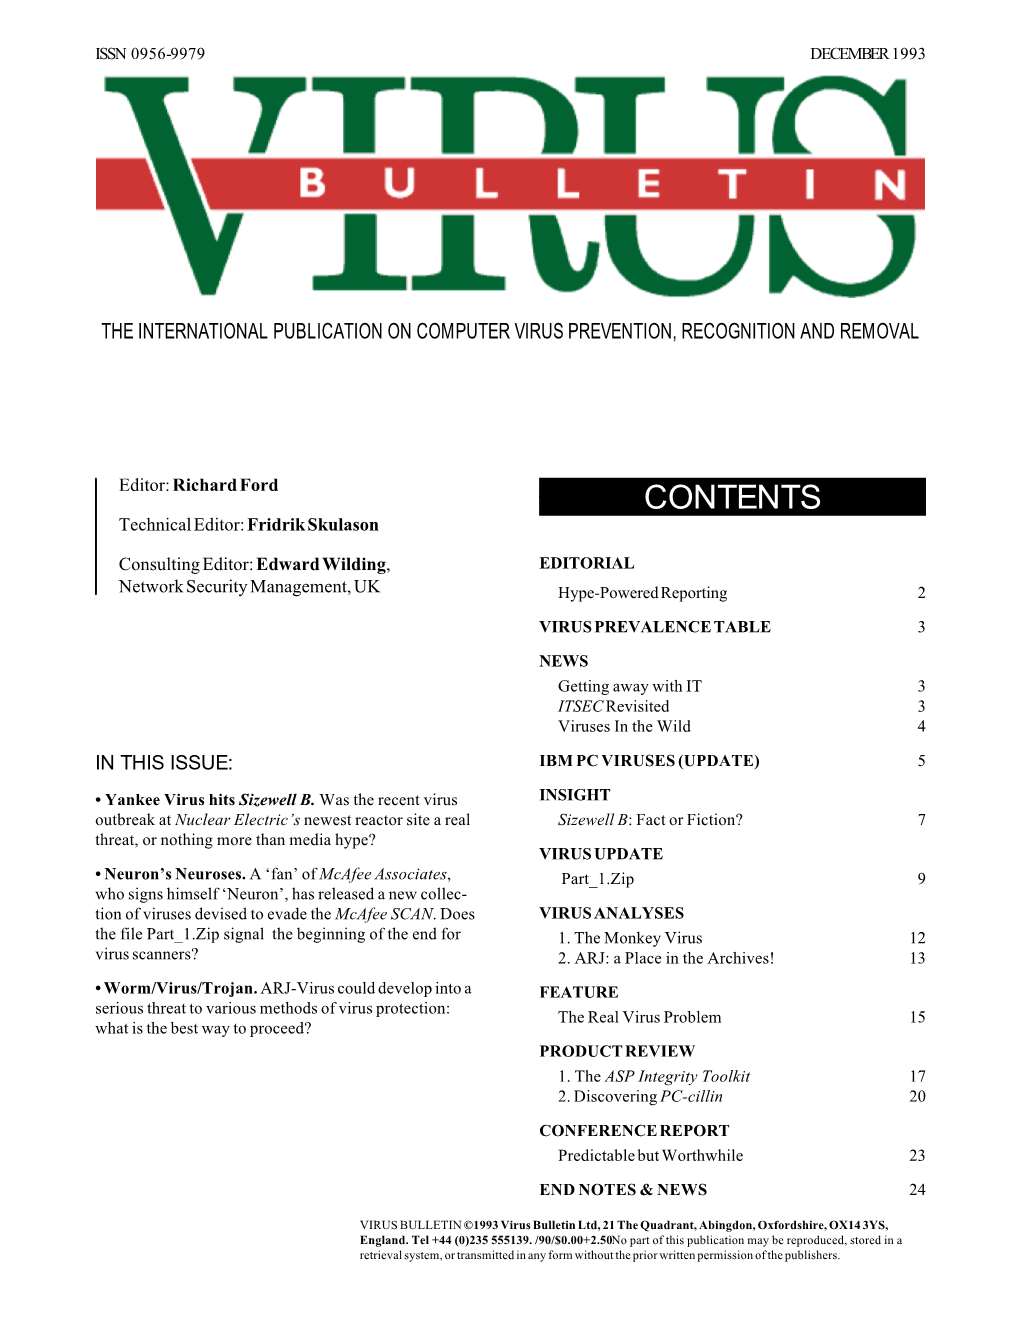 Virus Bulletin, December 1993